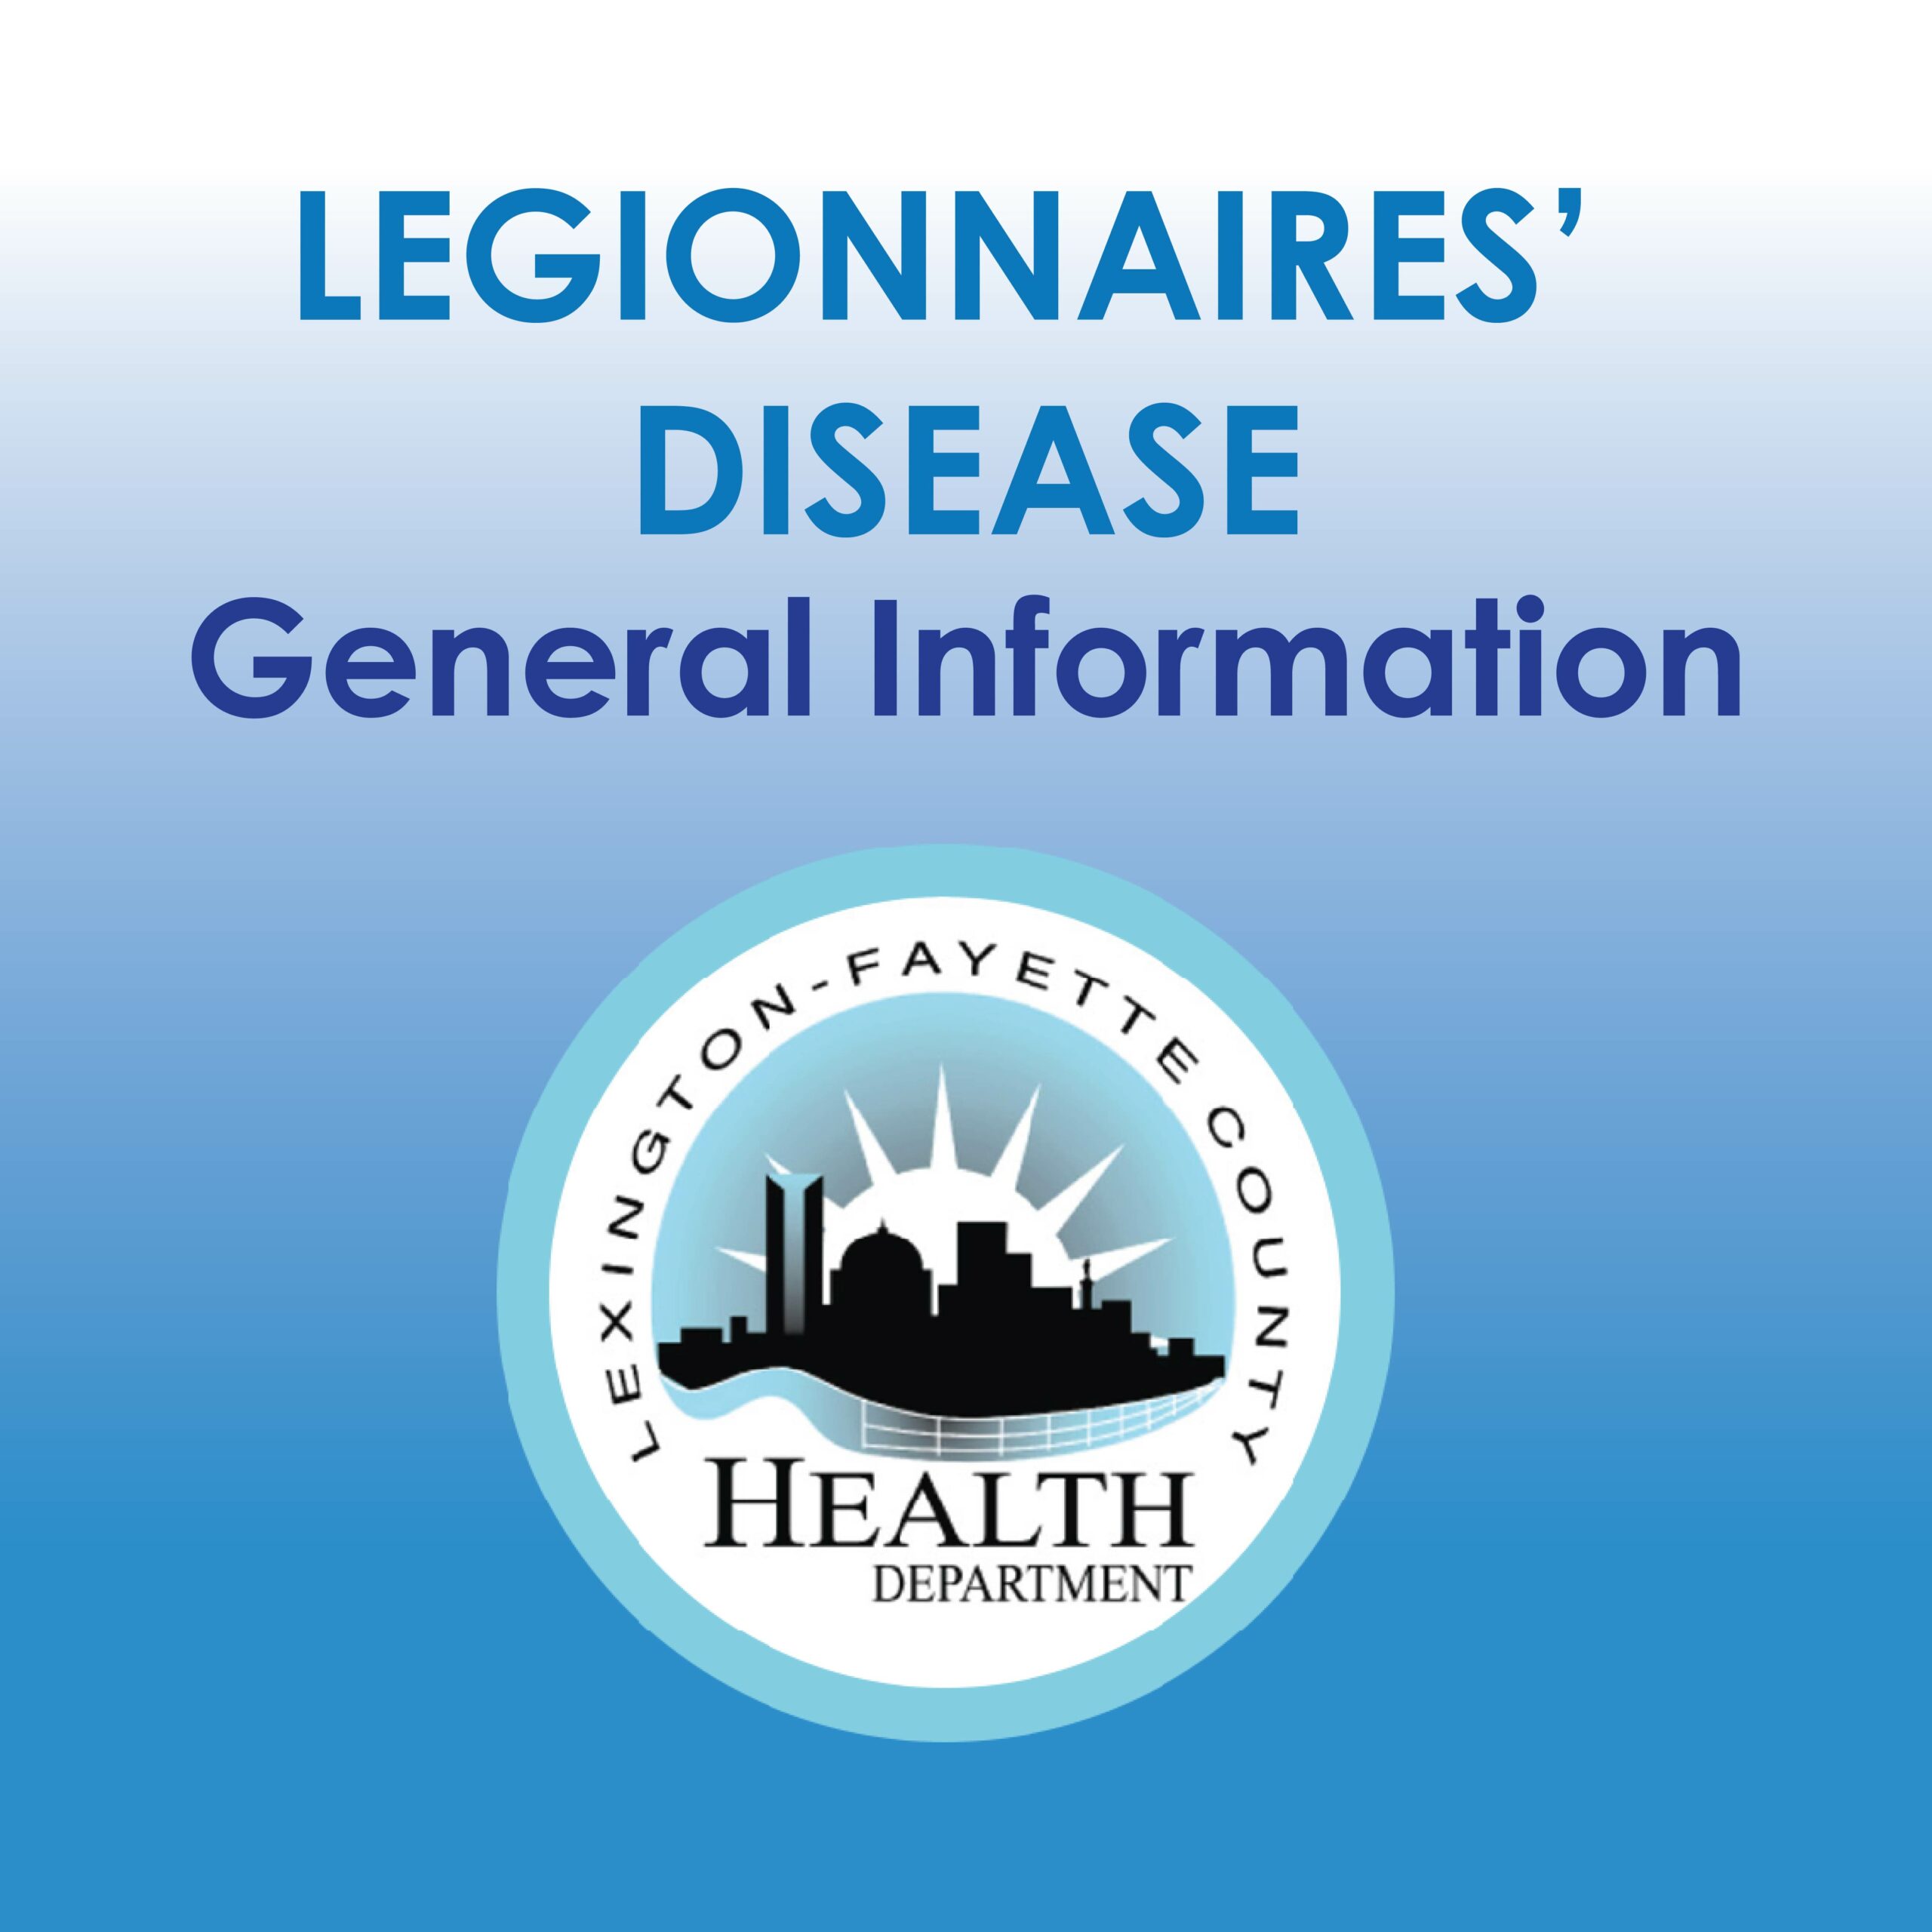 Know more about Legionnaires’ disease